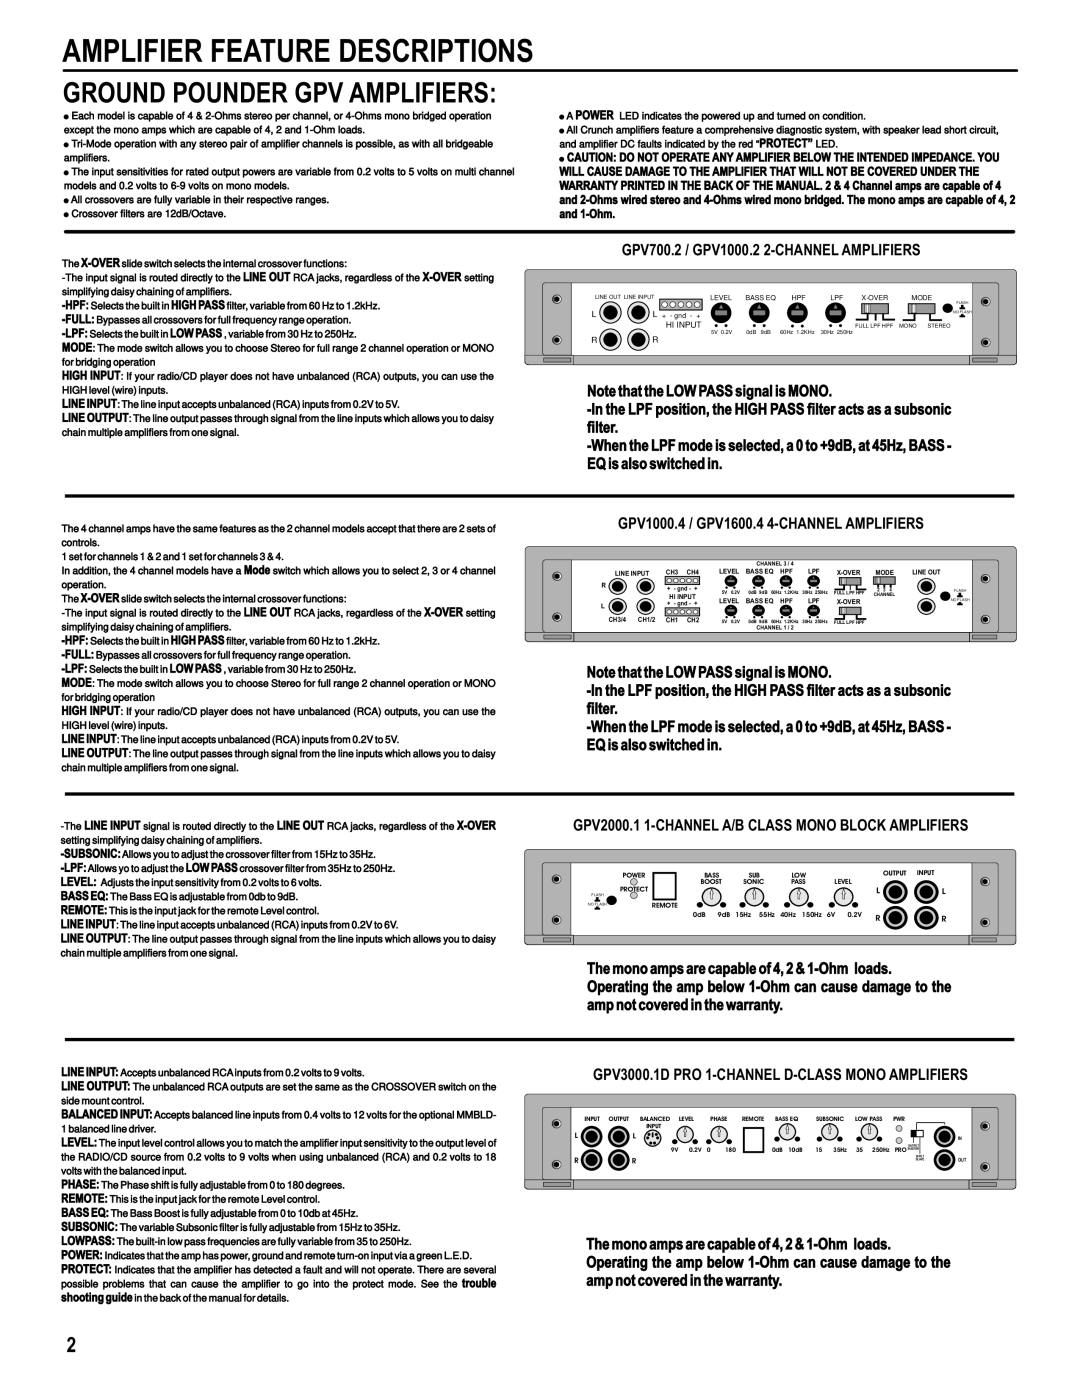 Maxxsonics GPV700.2, GPV1000.2, GPV2000.1, GPV1600.4, GPV1000.4 Amplifier Feature Descriptions, Ground Pounder Gpv Amplifiers 